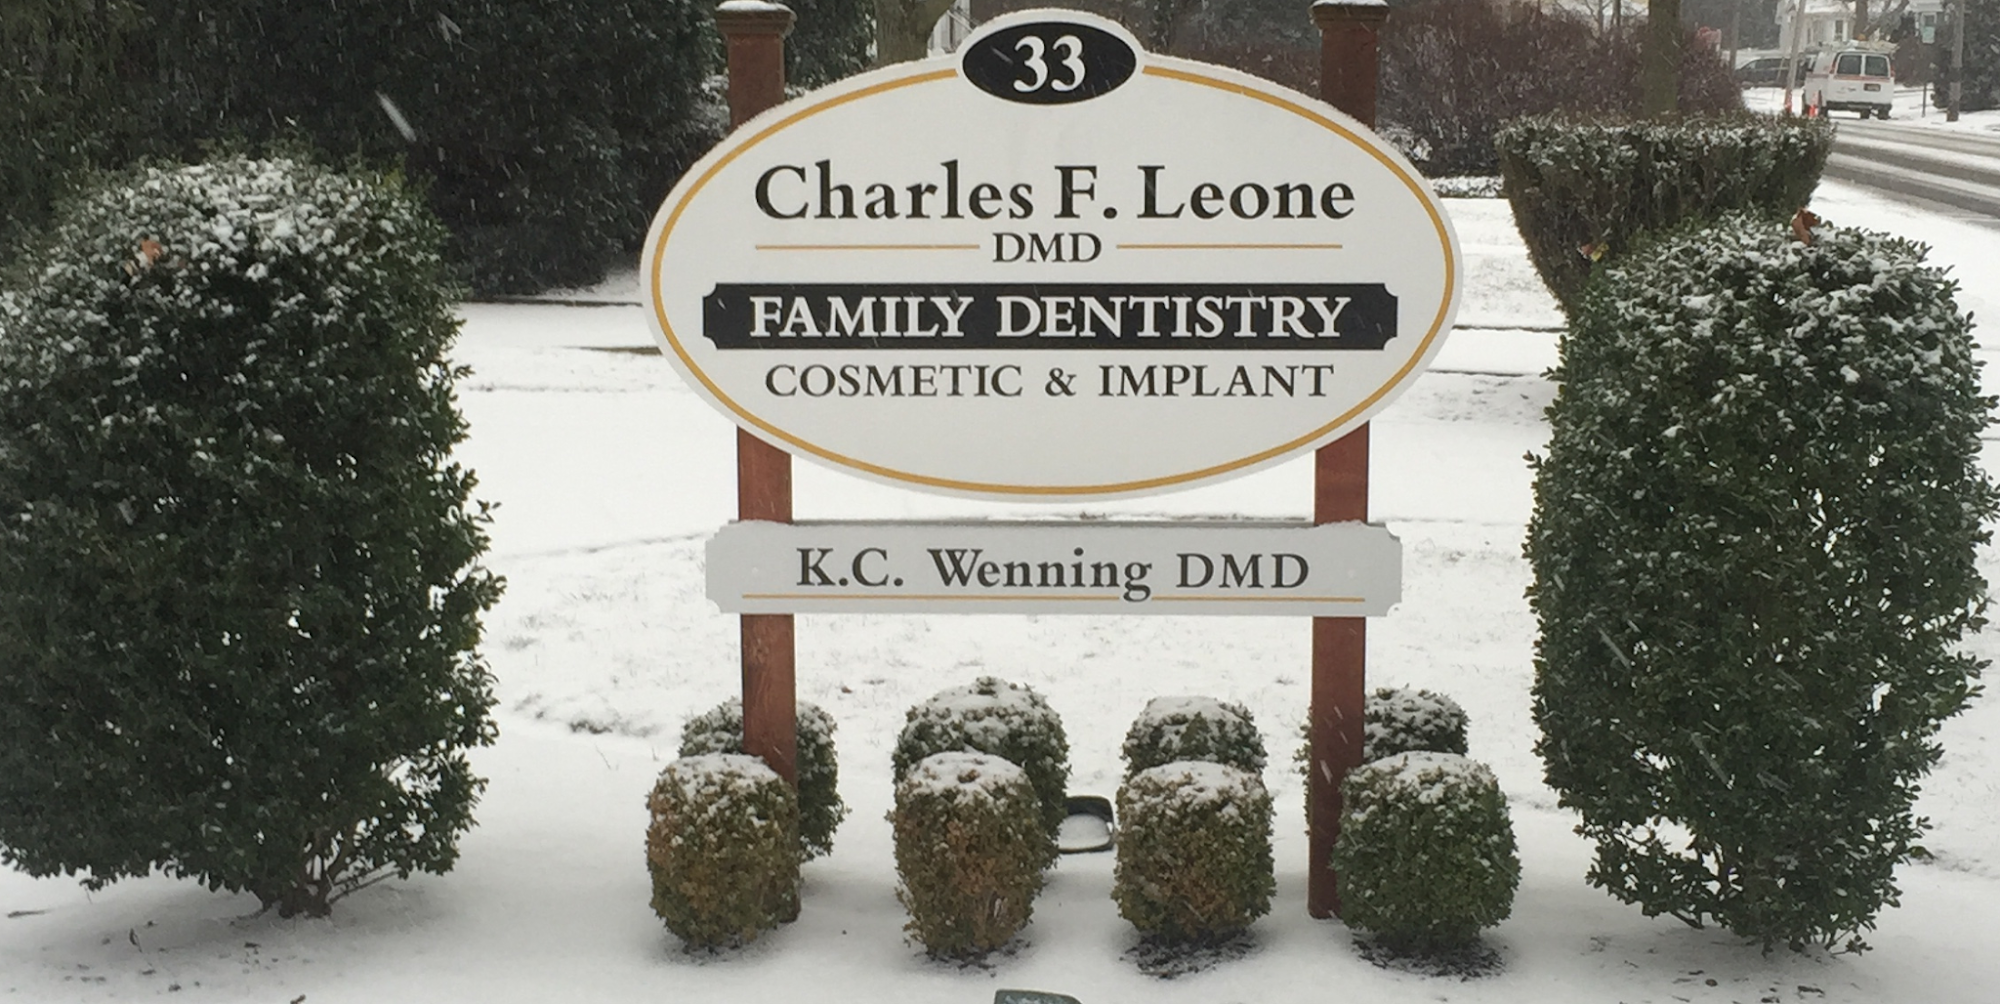 Charles F. Leone and Dr. K. C. Wenning Dental